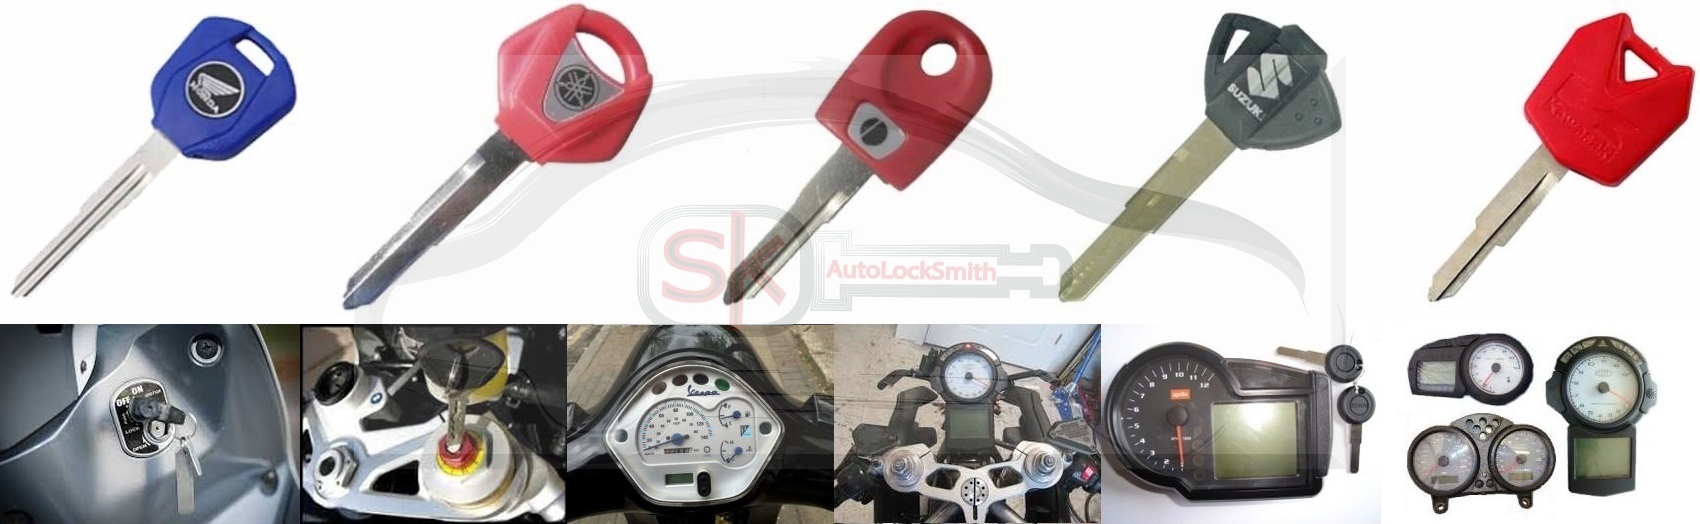 image showing motorcycle keys